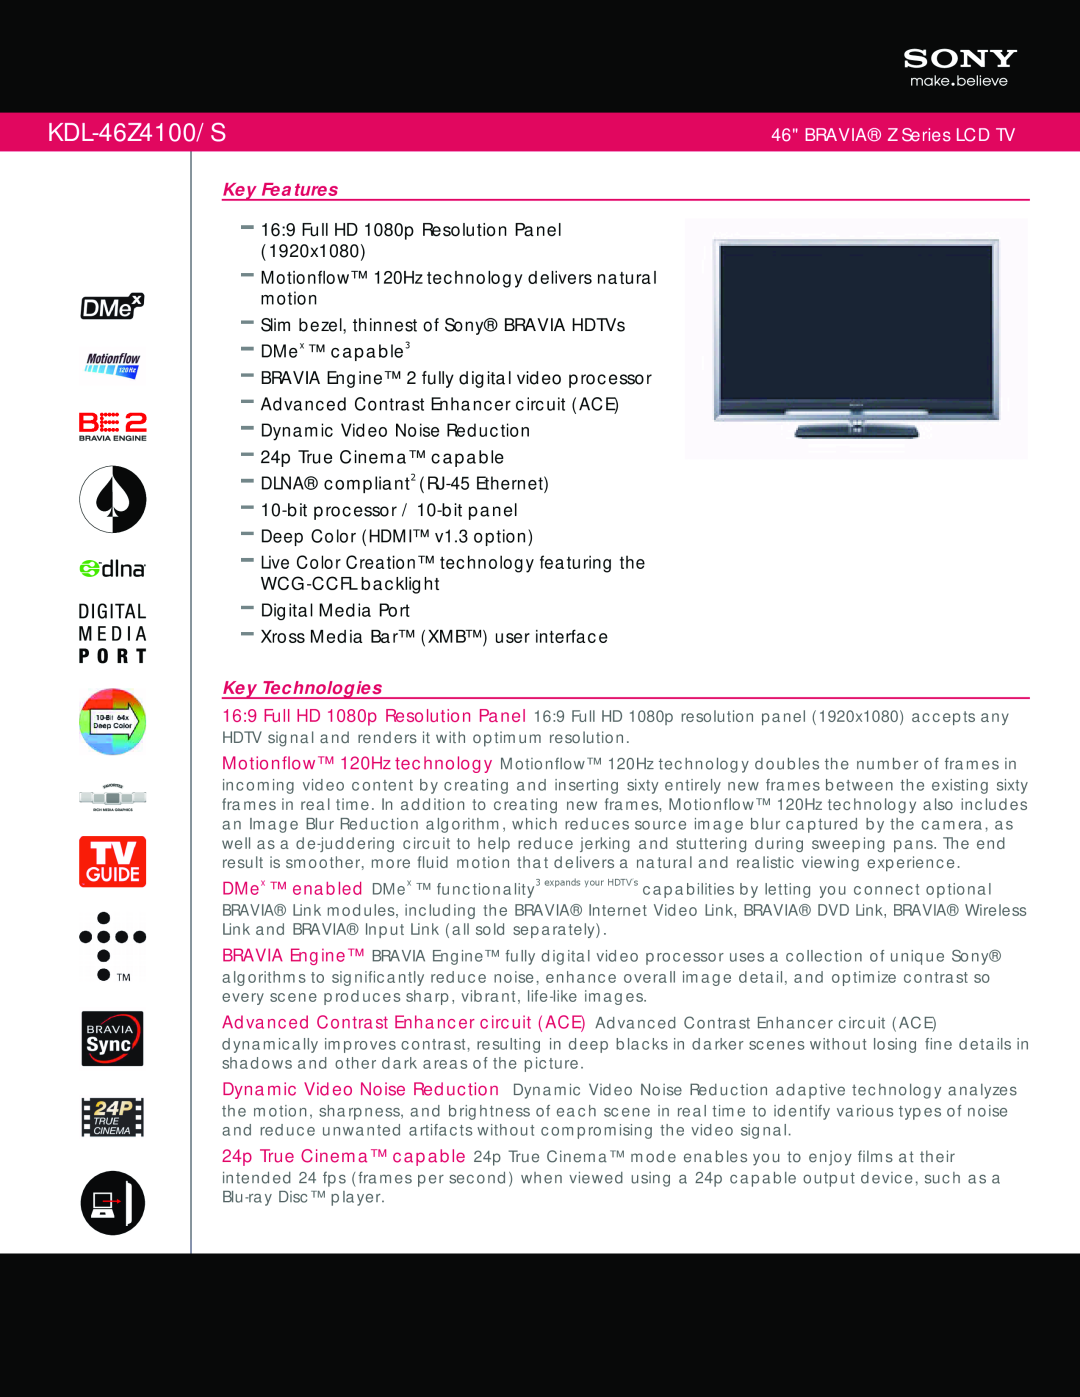 Sony KDL-46Z4100/S manual BRAVIA Z Series LCD TV, Key Features, Full HD 1080p Resolution Panel, Key Technologies 